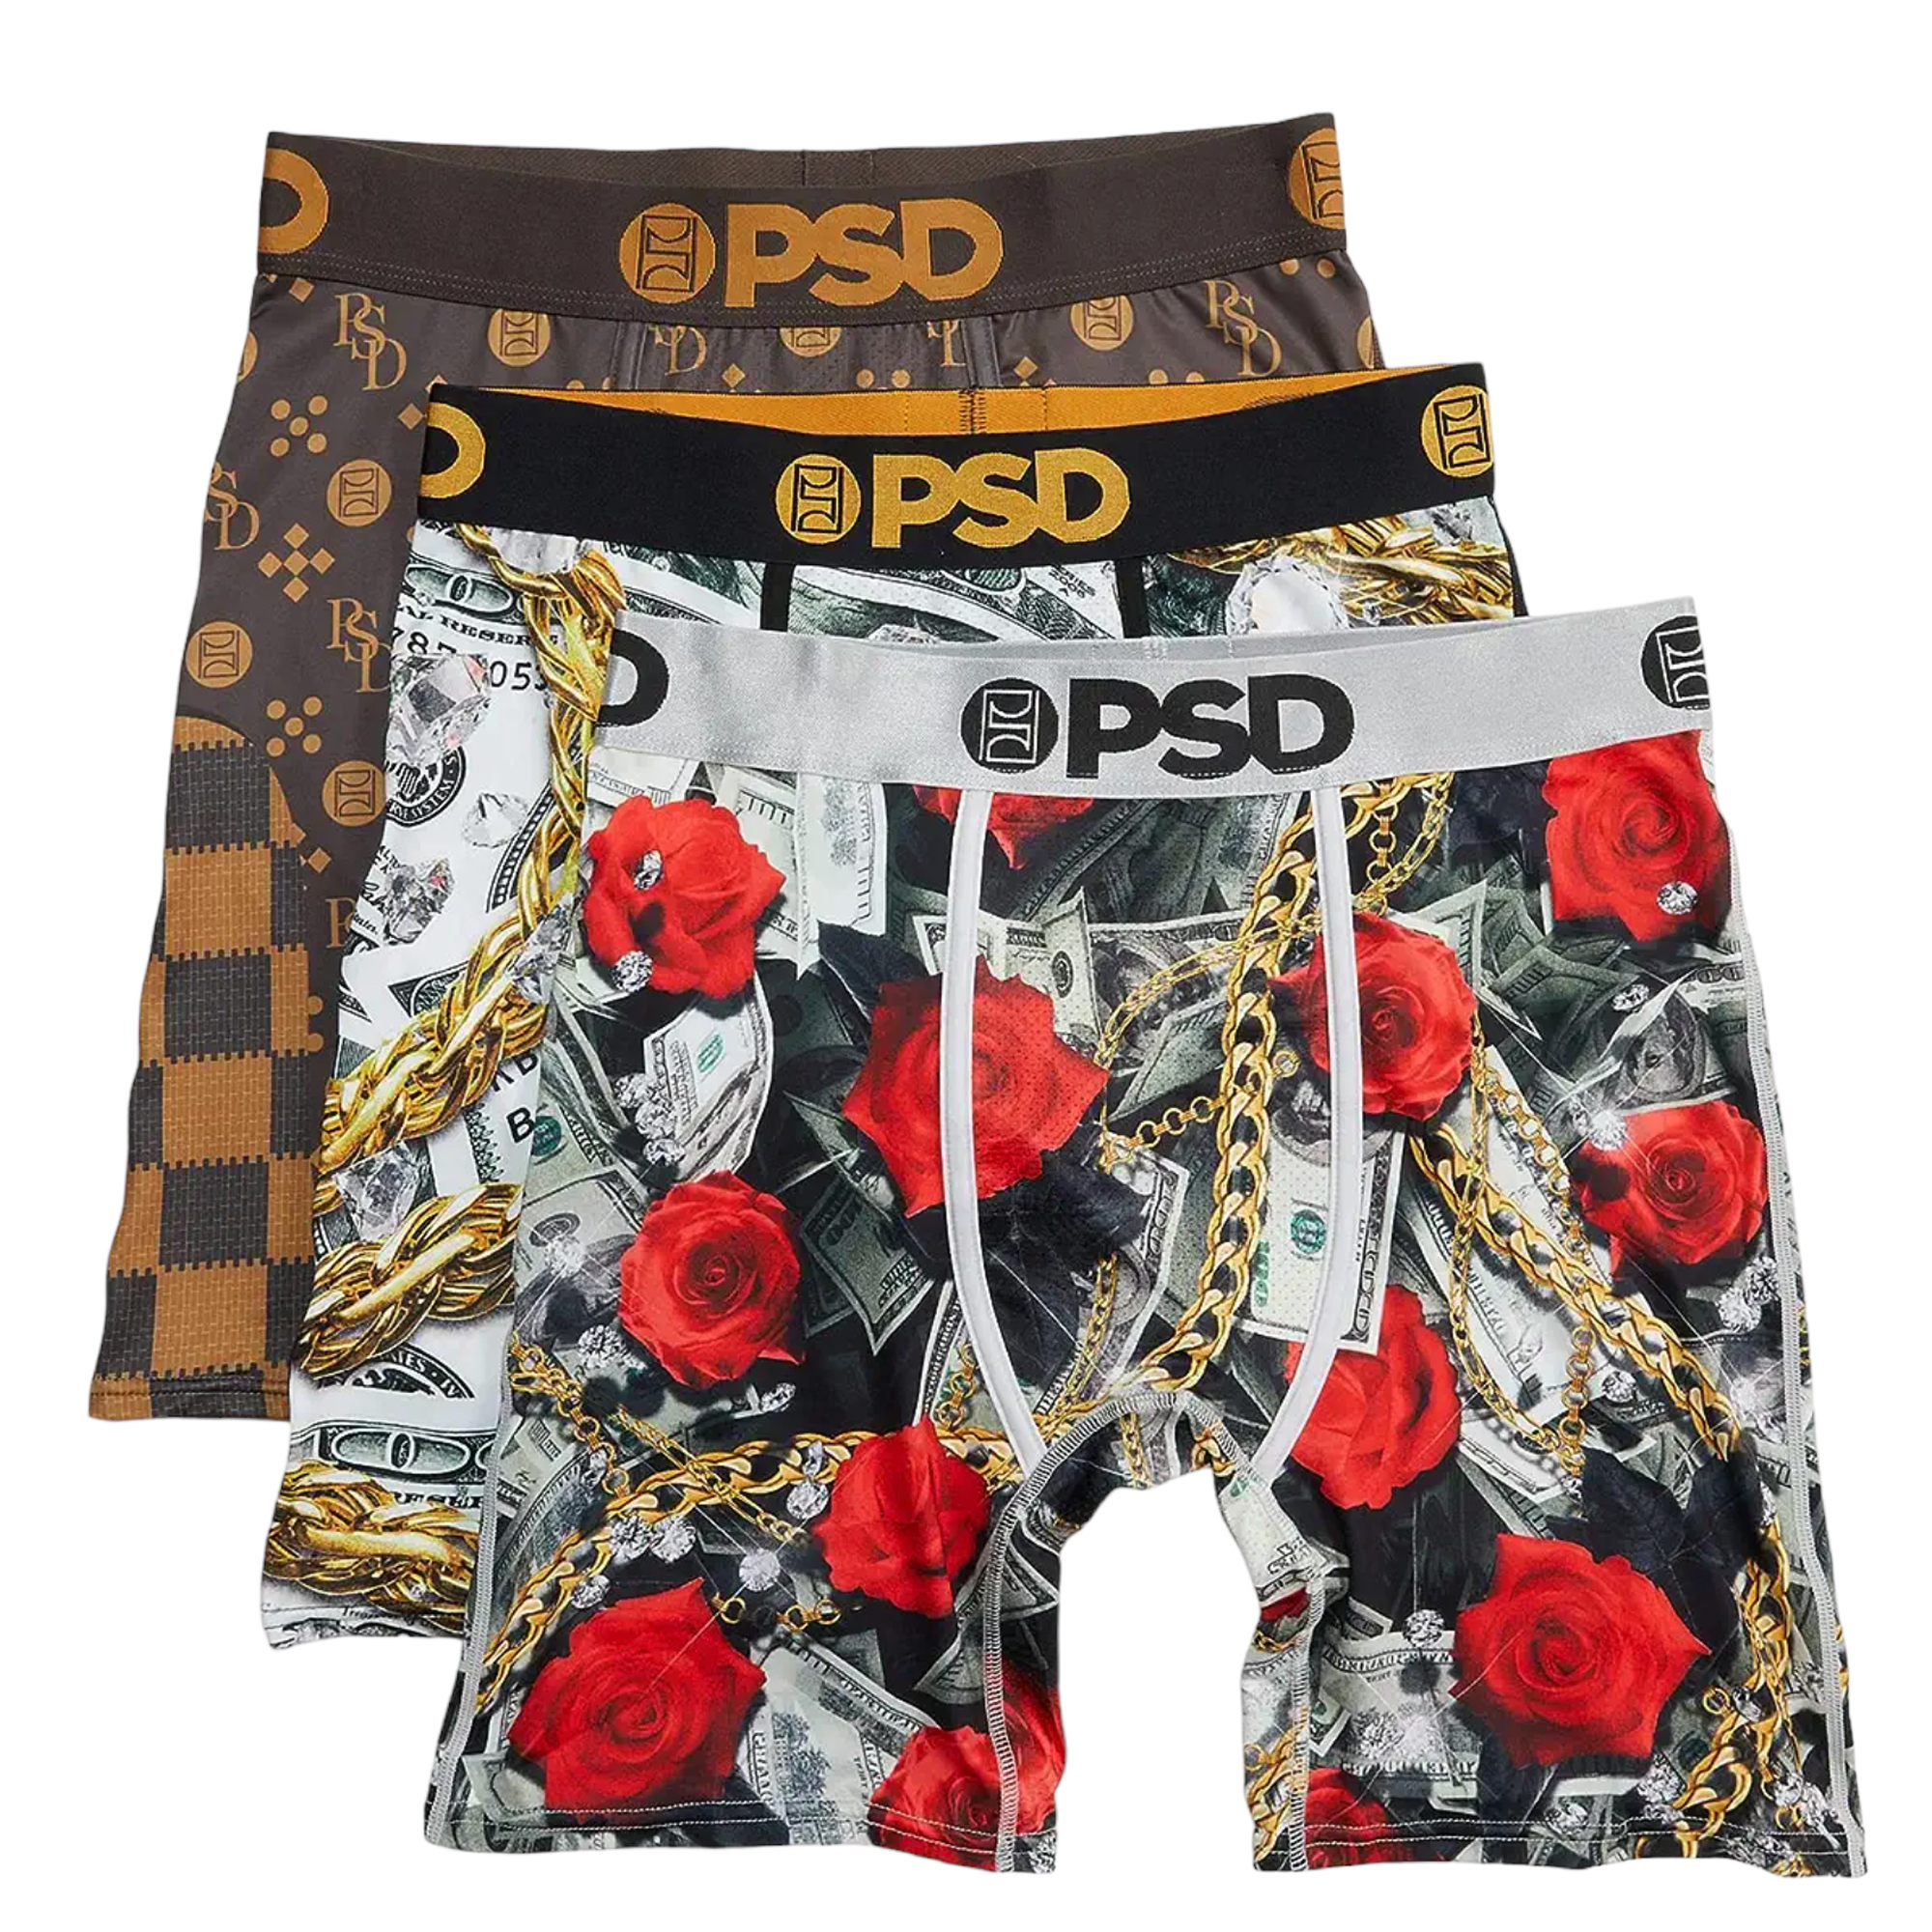 PSD Men's Wf Camo Glow 3-Pack Boxer Briefs, Multi, M, Multi  Wf Camo Glow  3pk, Medium : : Clothing, Shoes & Accessories